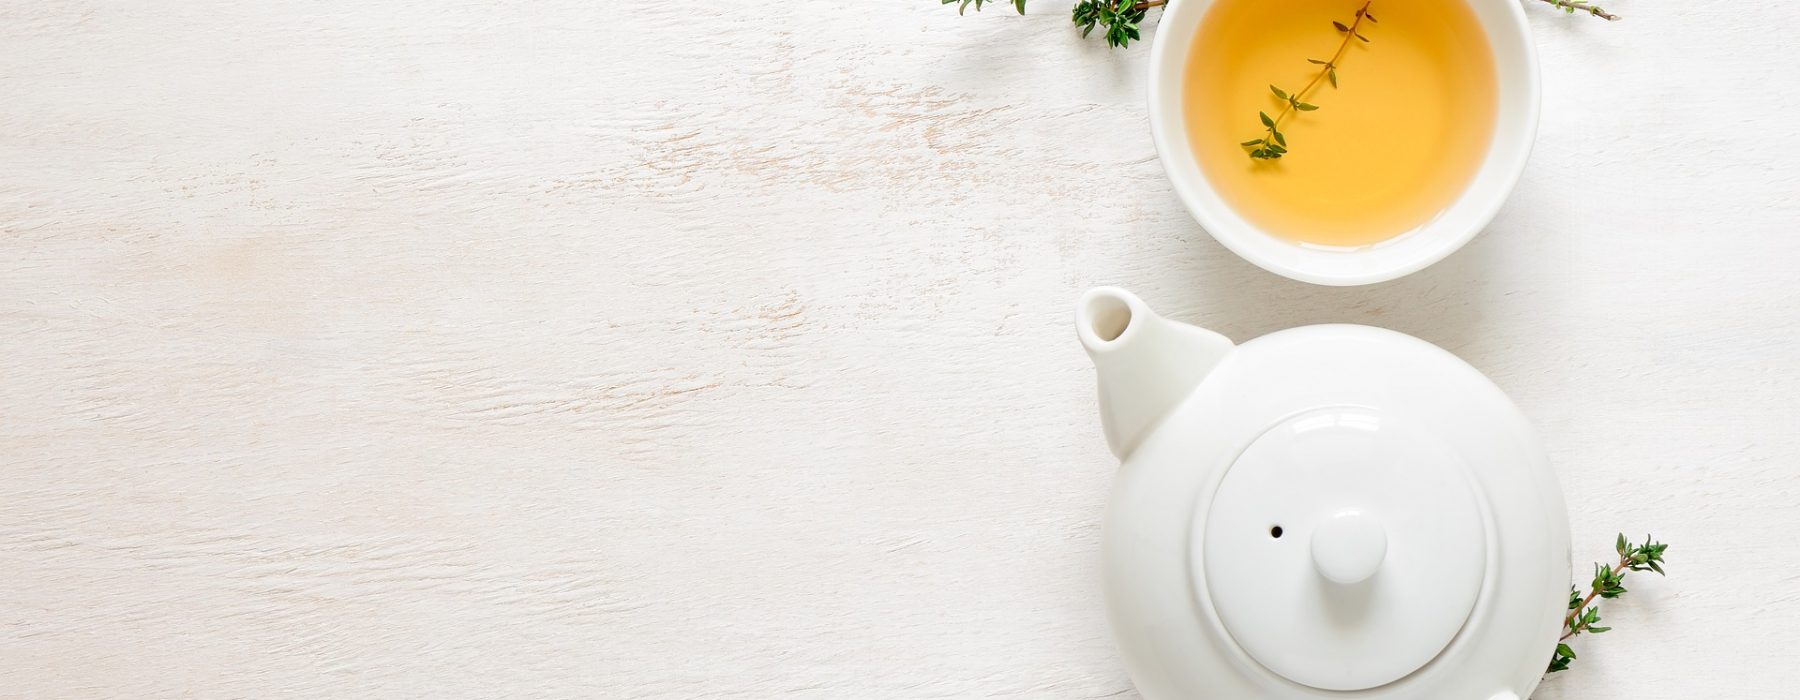 Zeleni čaj – zašto je toliko popularan i po čemu je poseban?